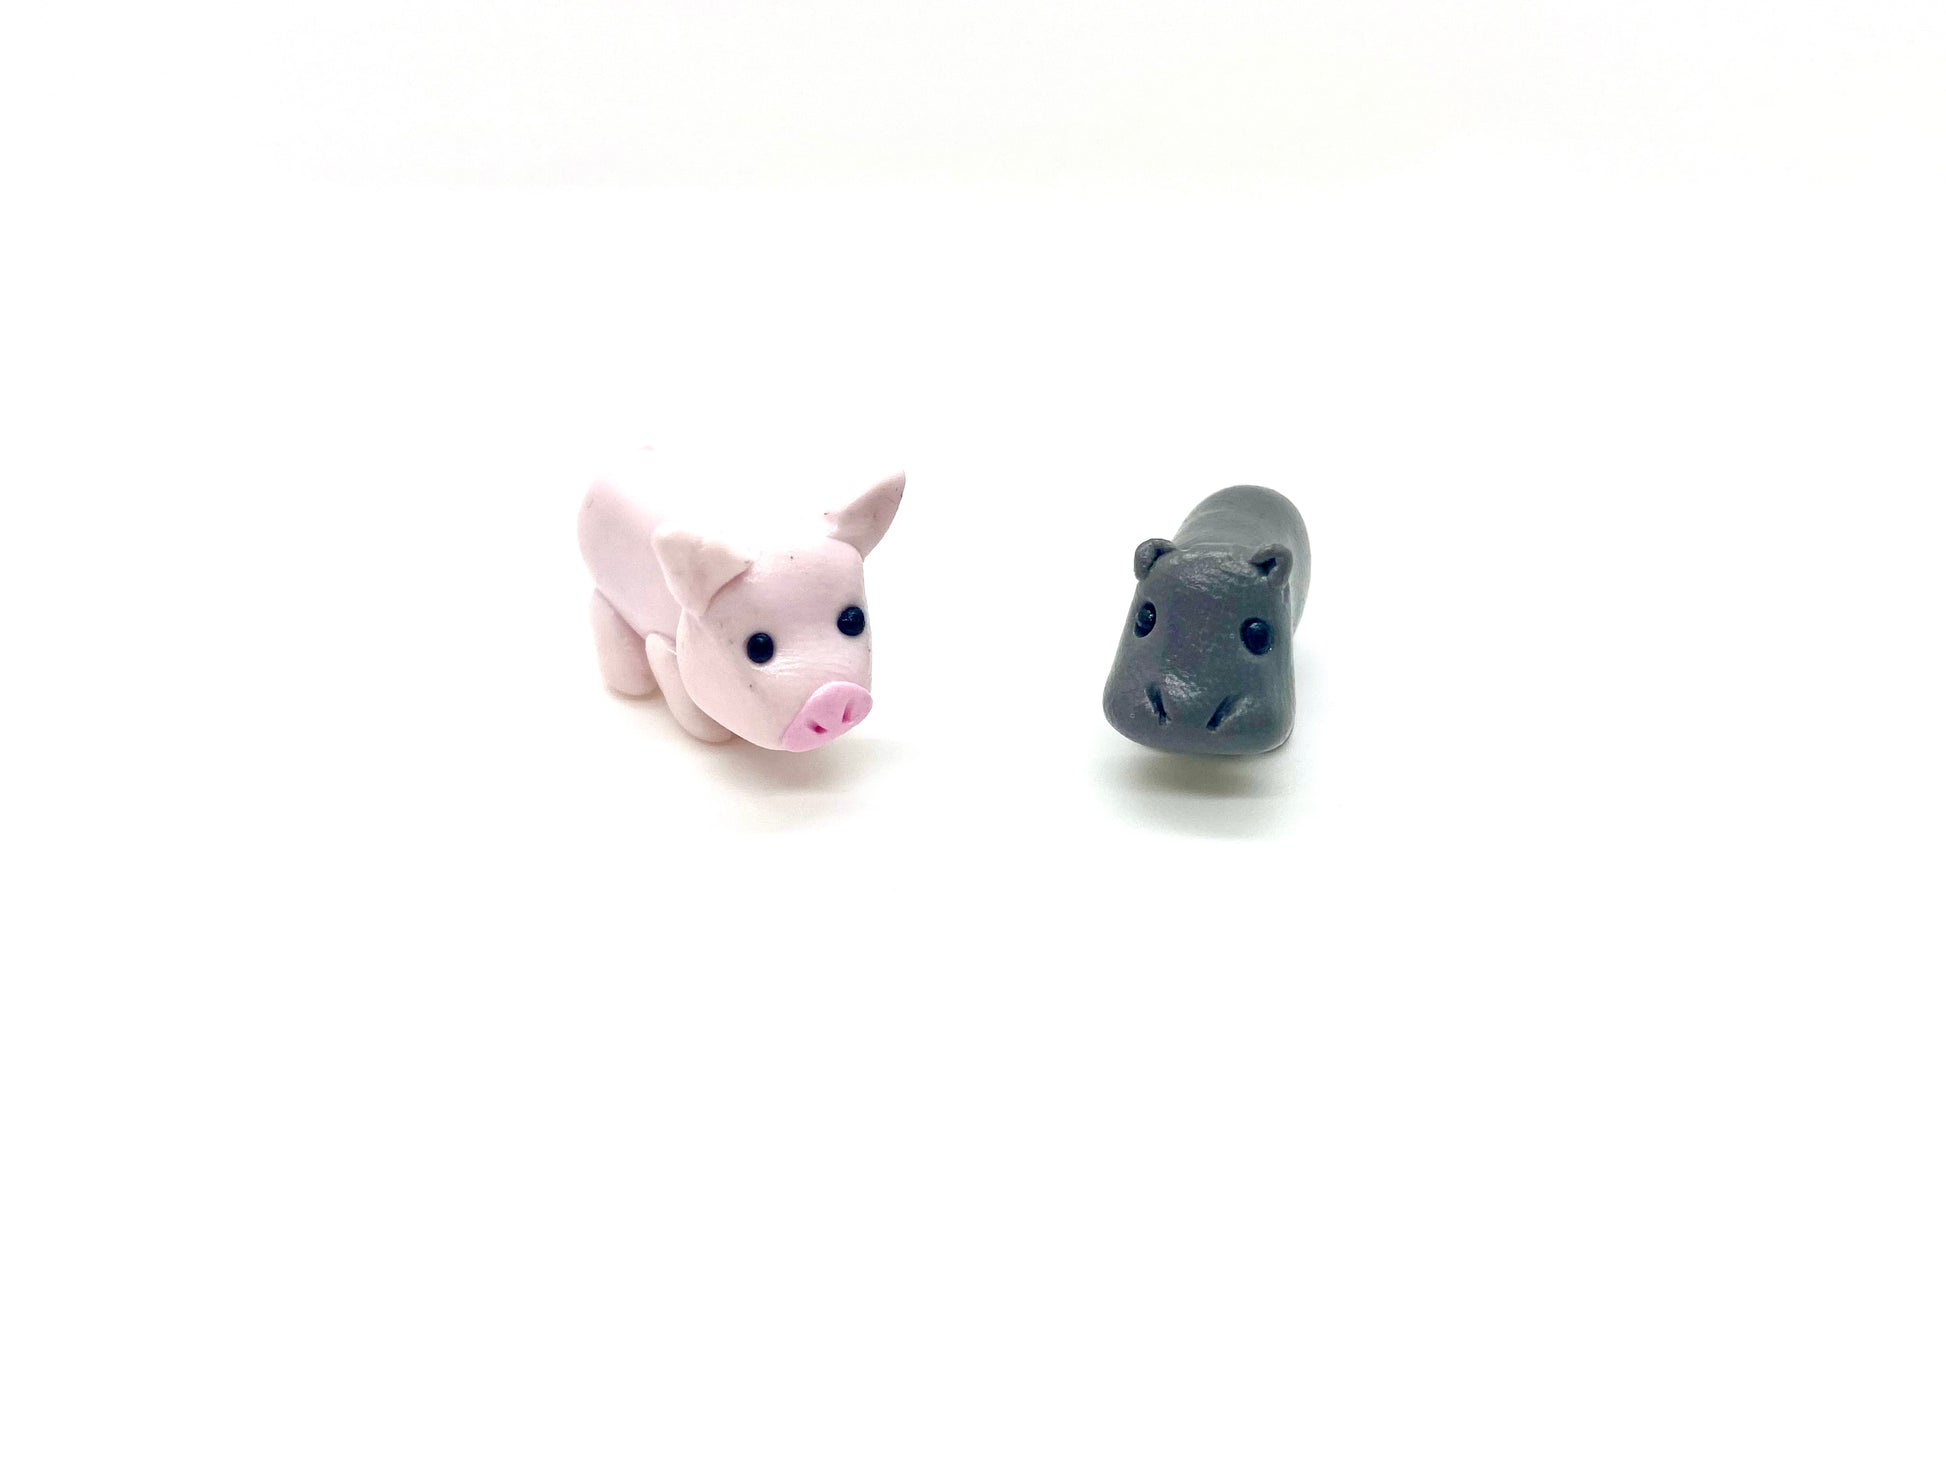 Tiny Animal Figurines | Mini Animal Figurines | Tiny Animal Haven